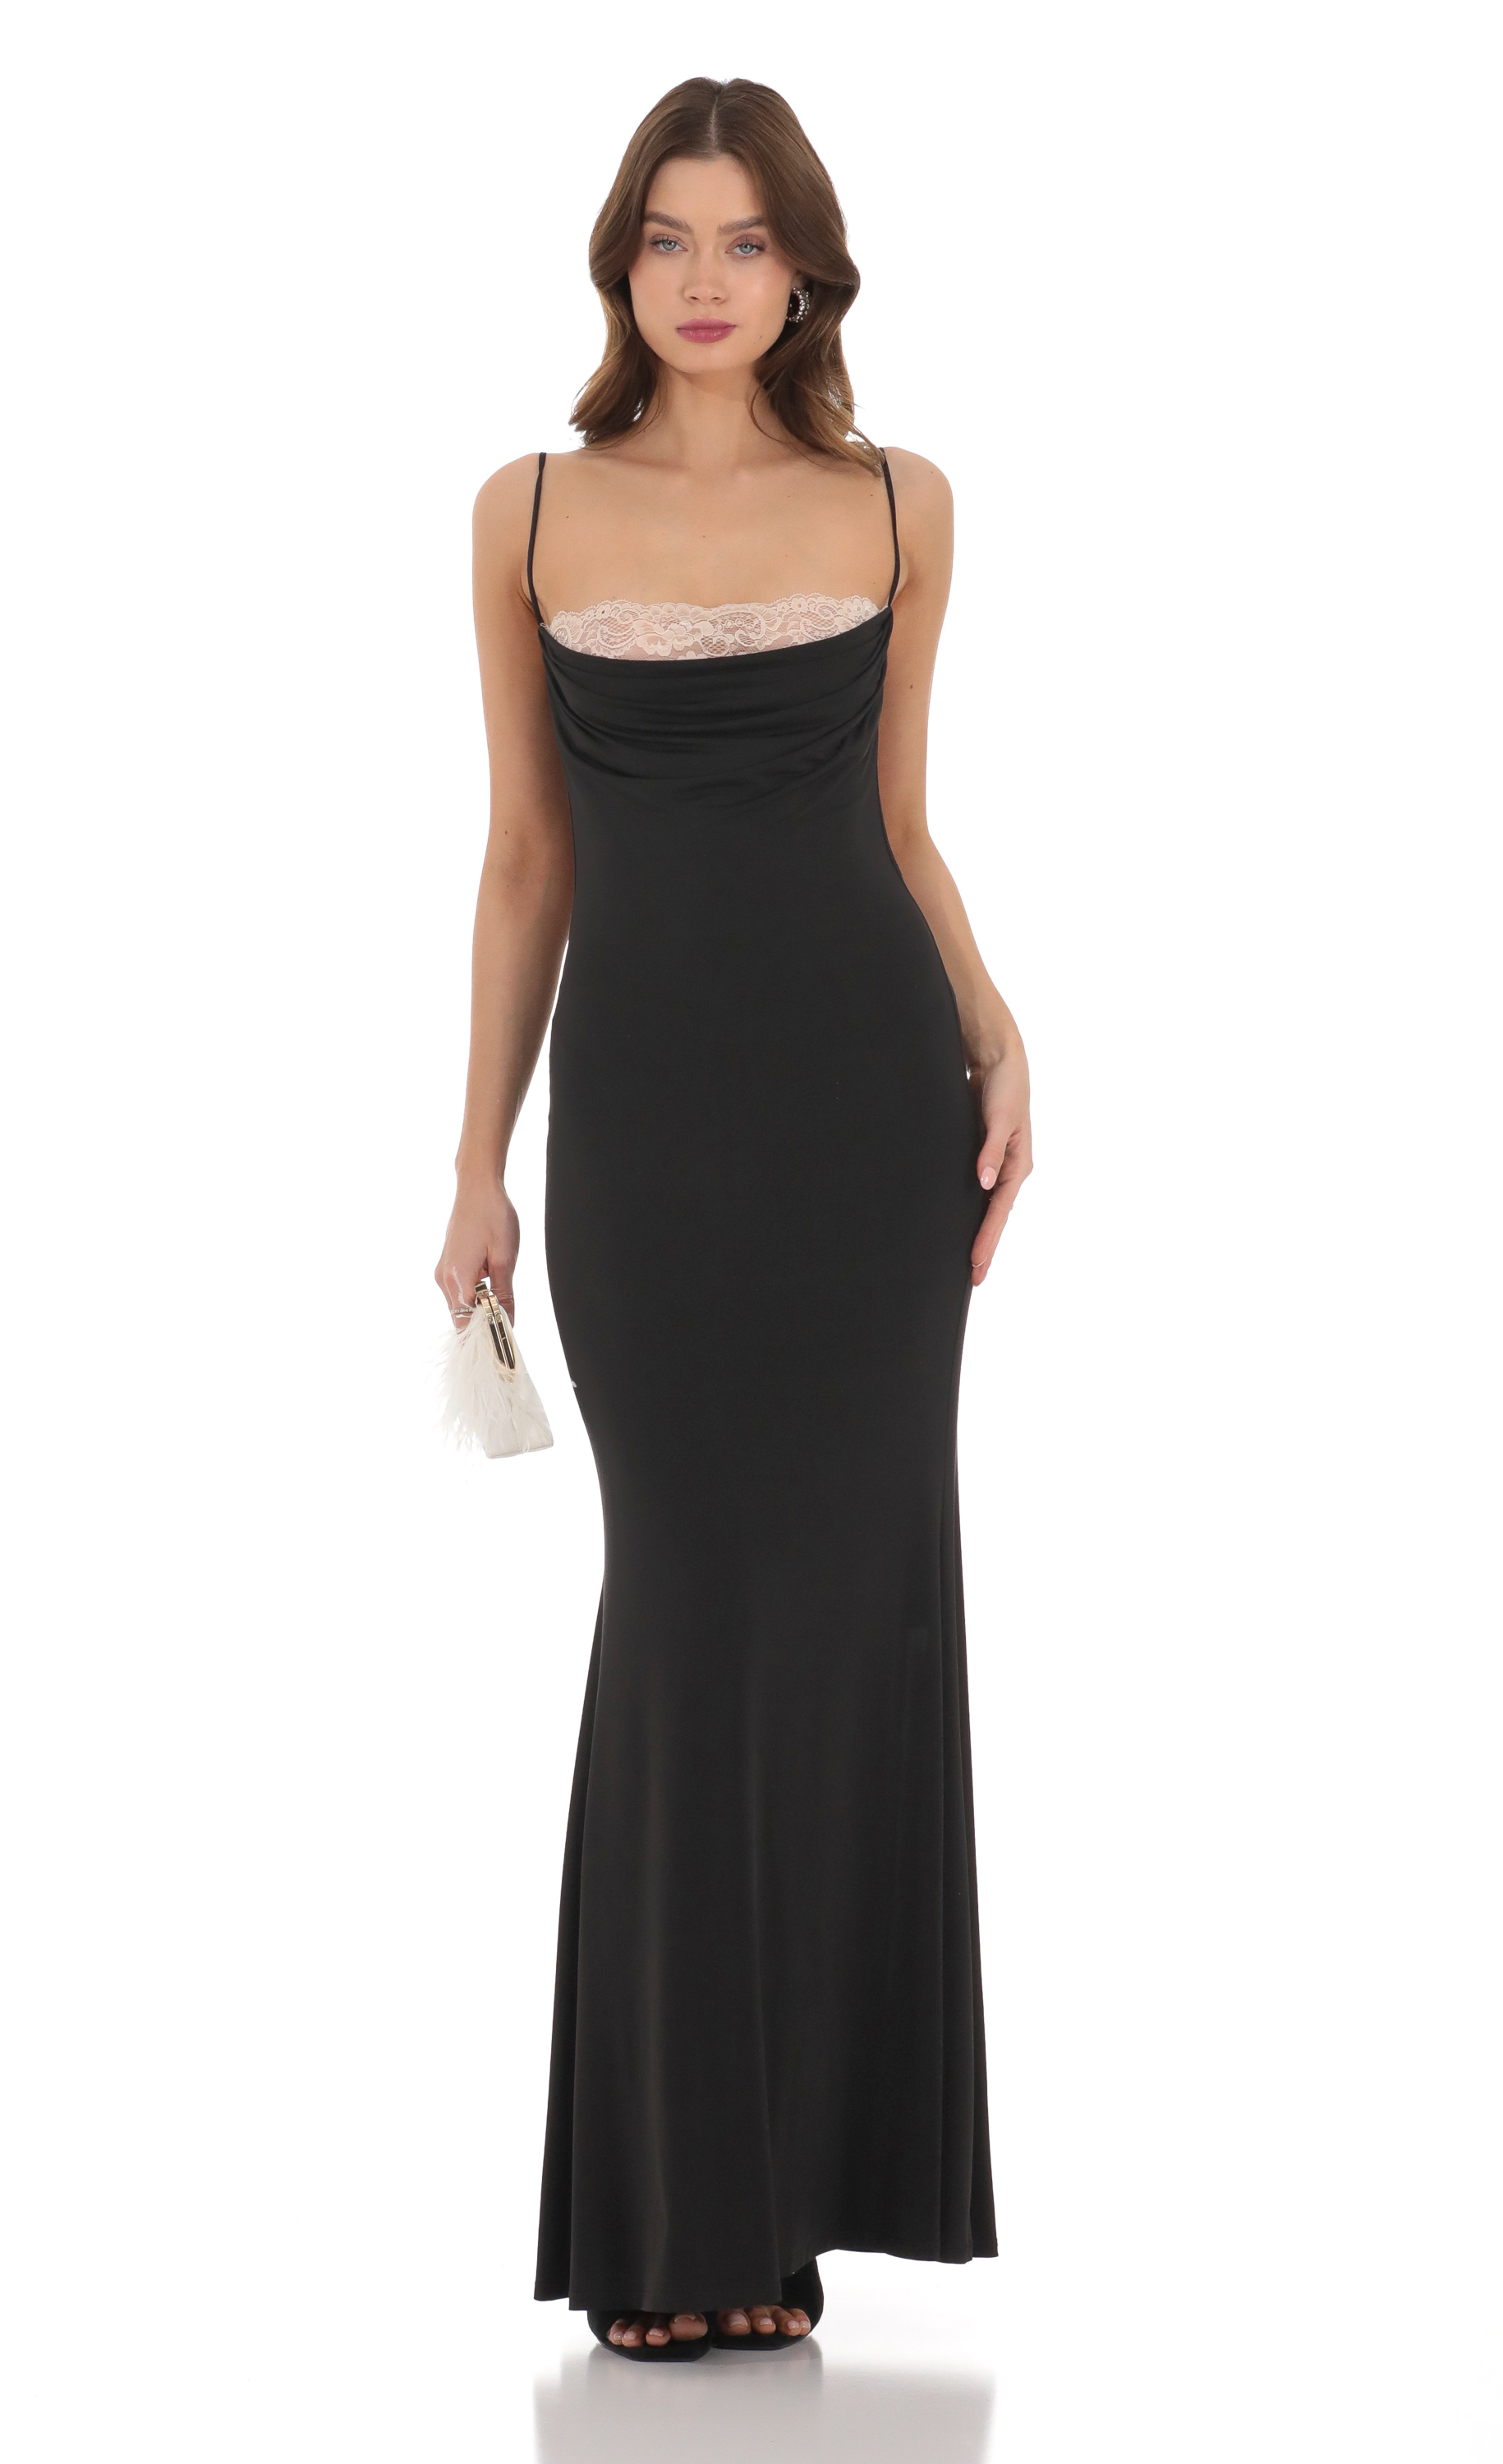 Lace Cowl Neck Maxi Dress in Black